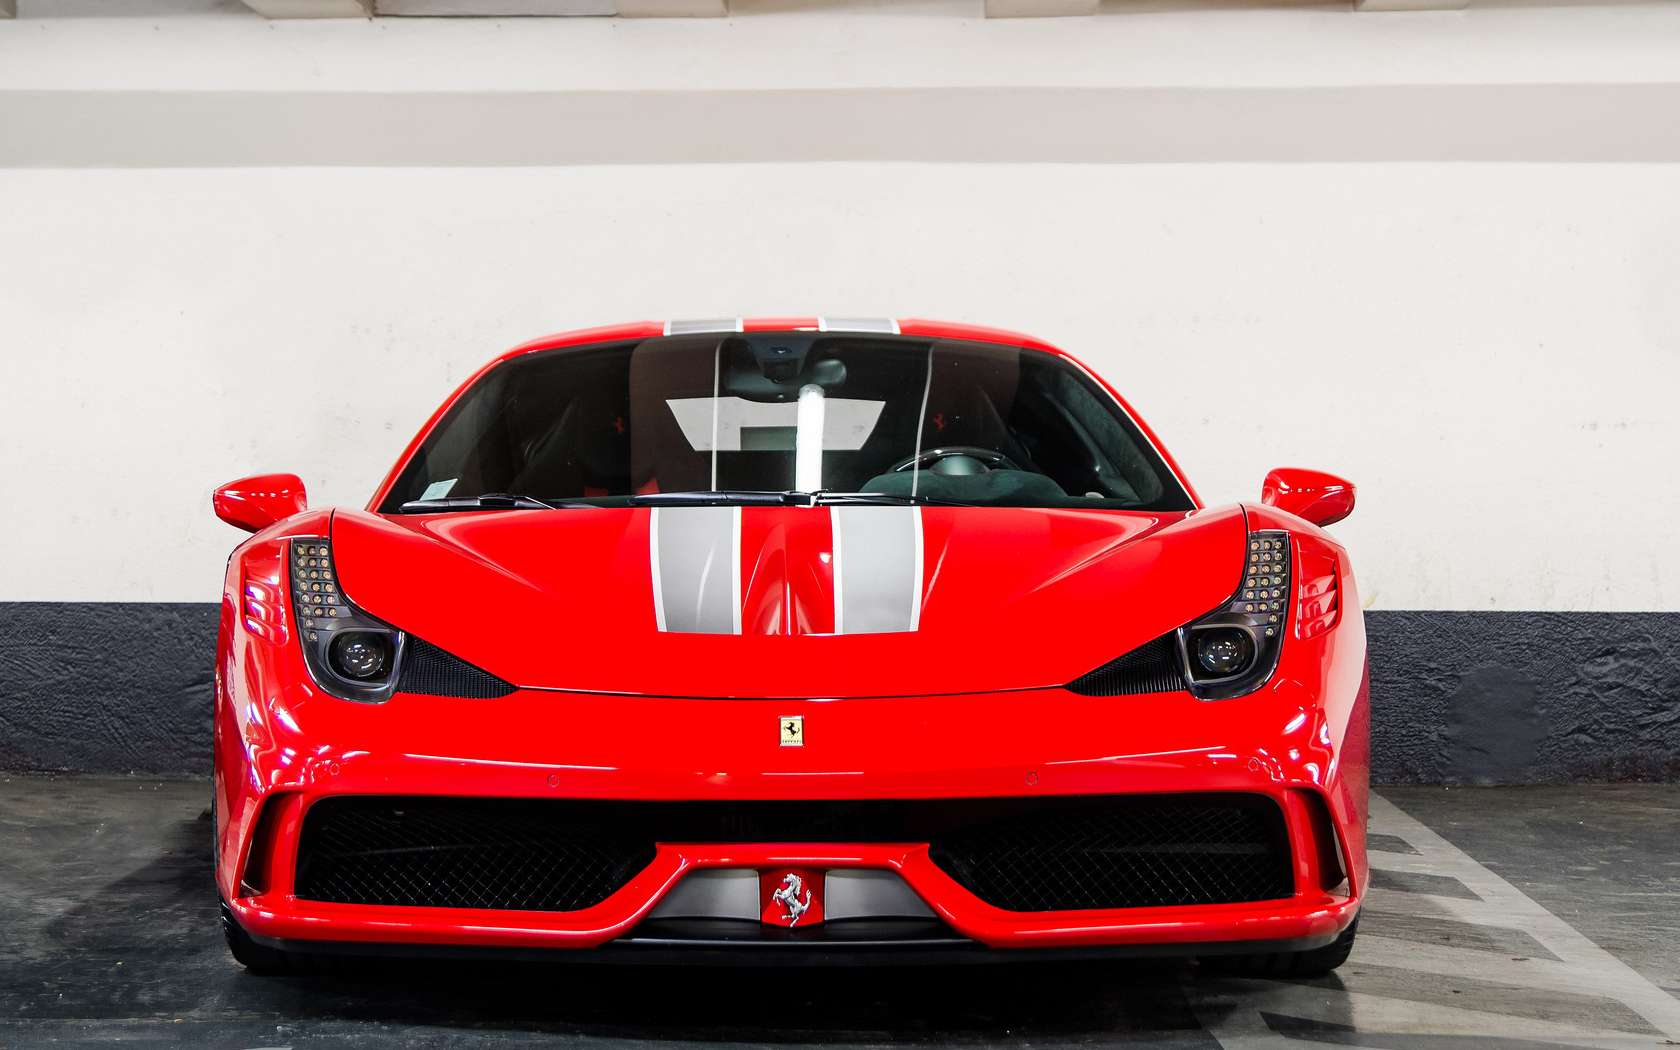  Ferrari HQ Background Images